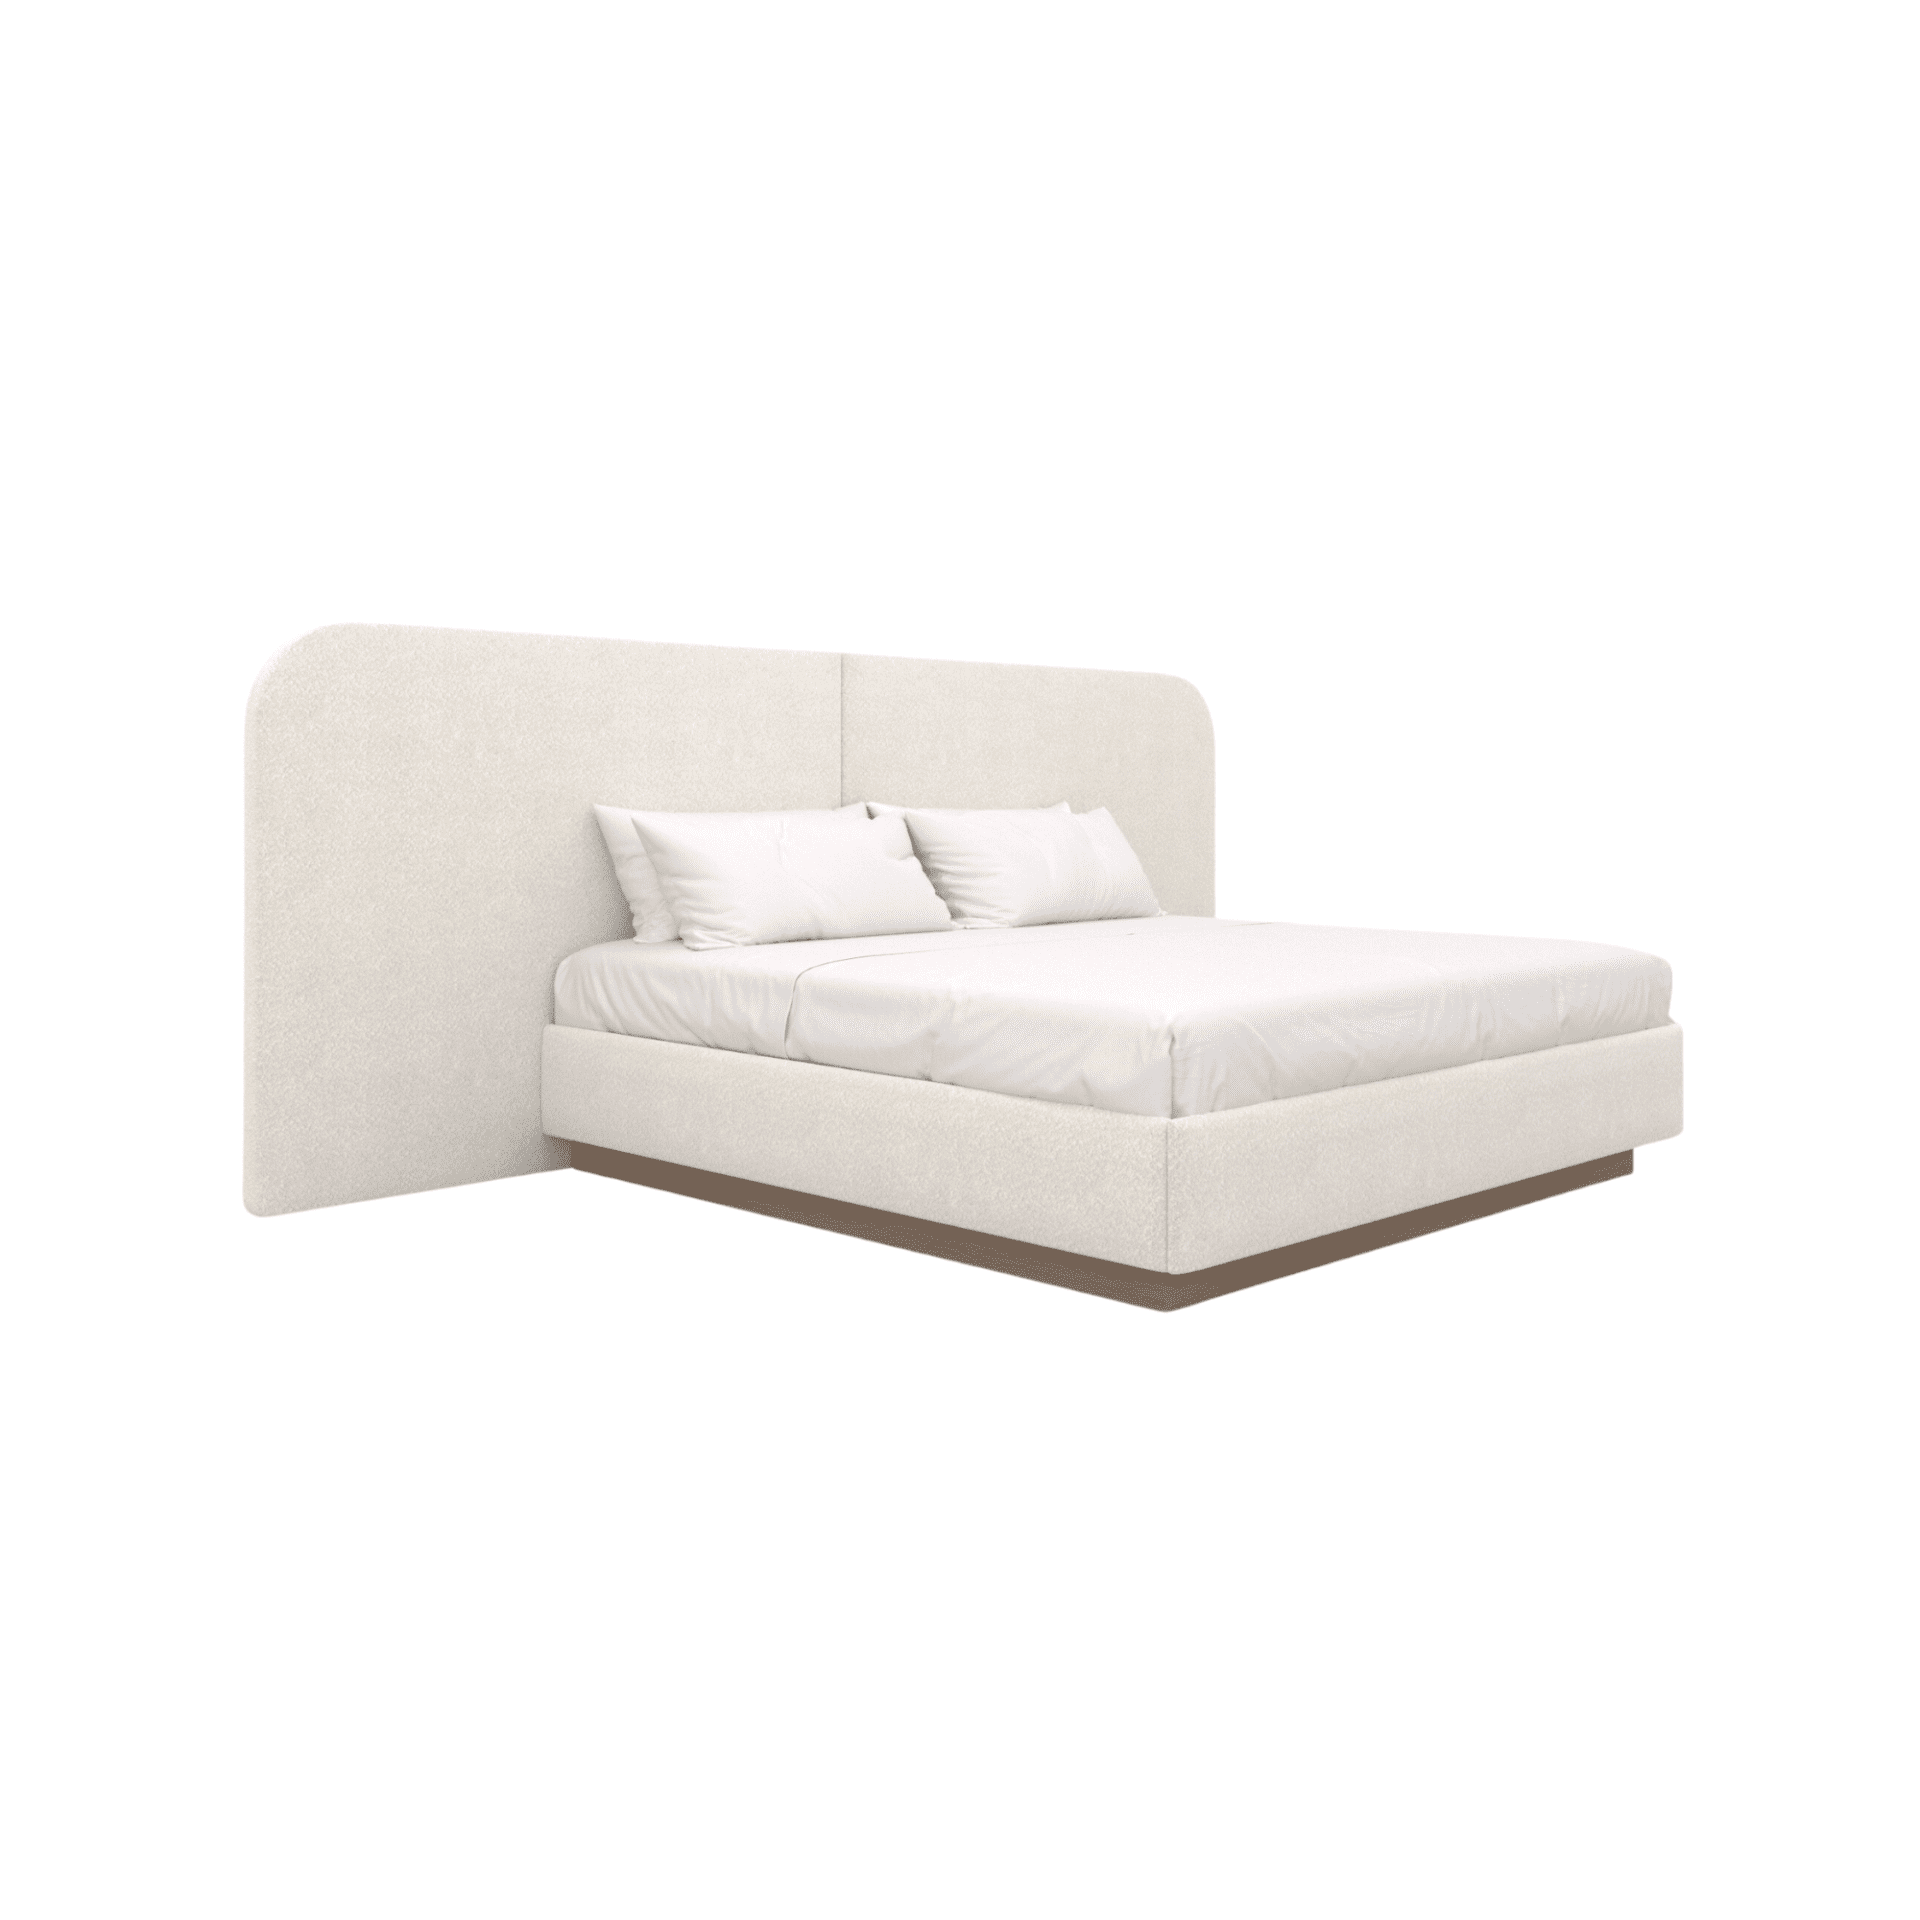 ACCORD-freestanding-upholstered-headboard-bed-luxury-furniture-blend-home-furnishings